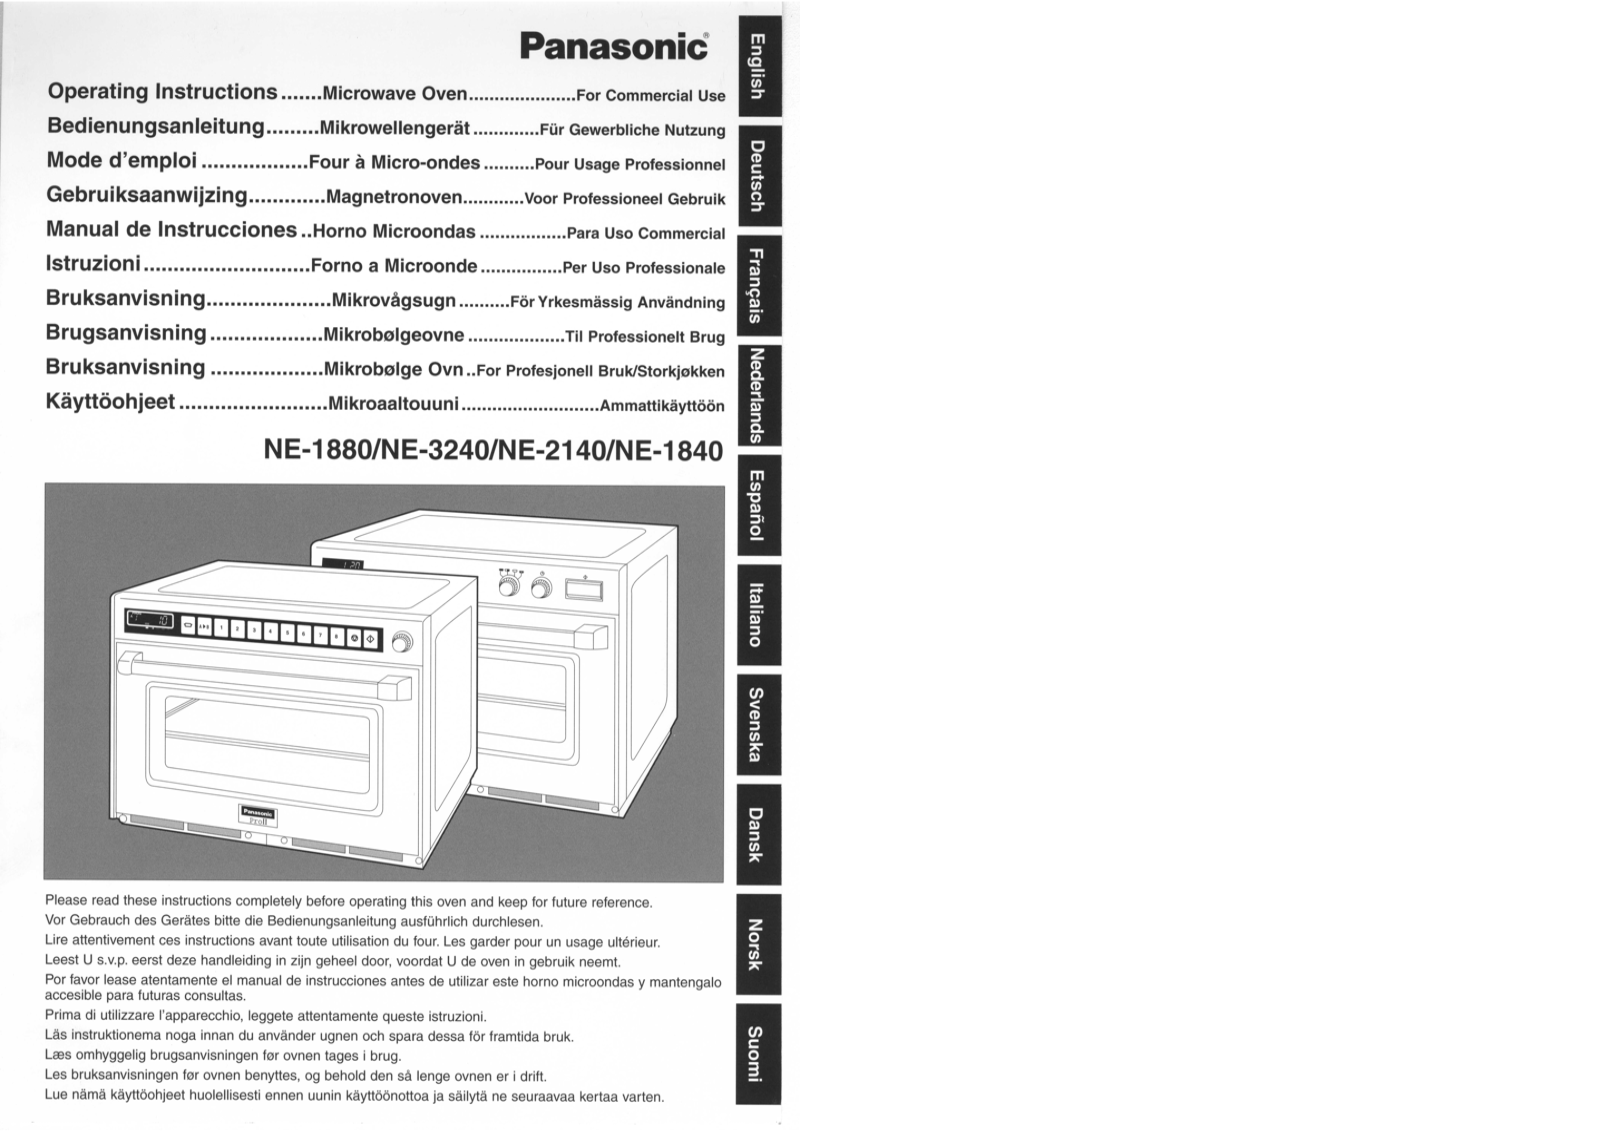 PANASONIC NE-1840, NE-2140, NE-3240 User Manual